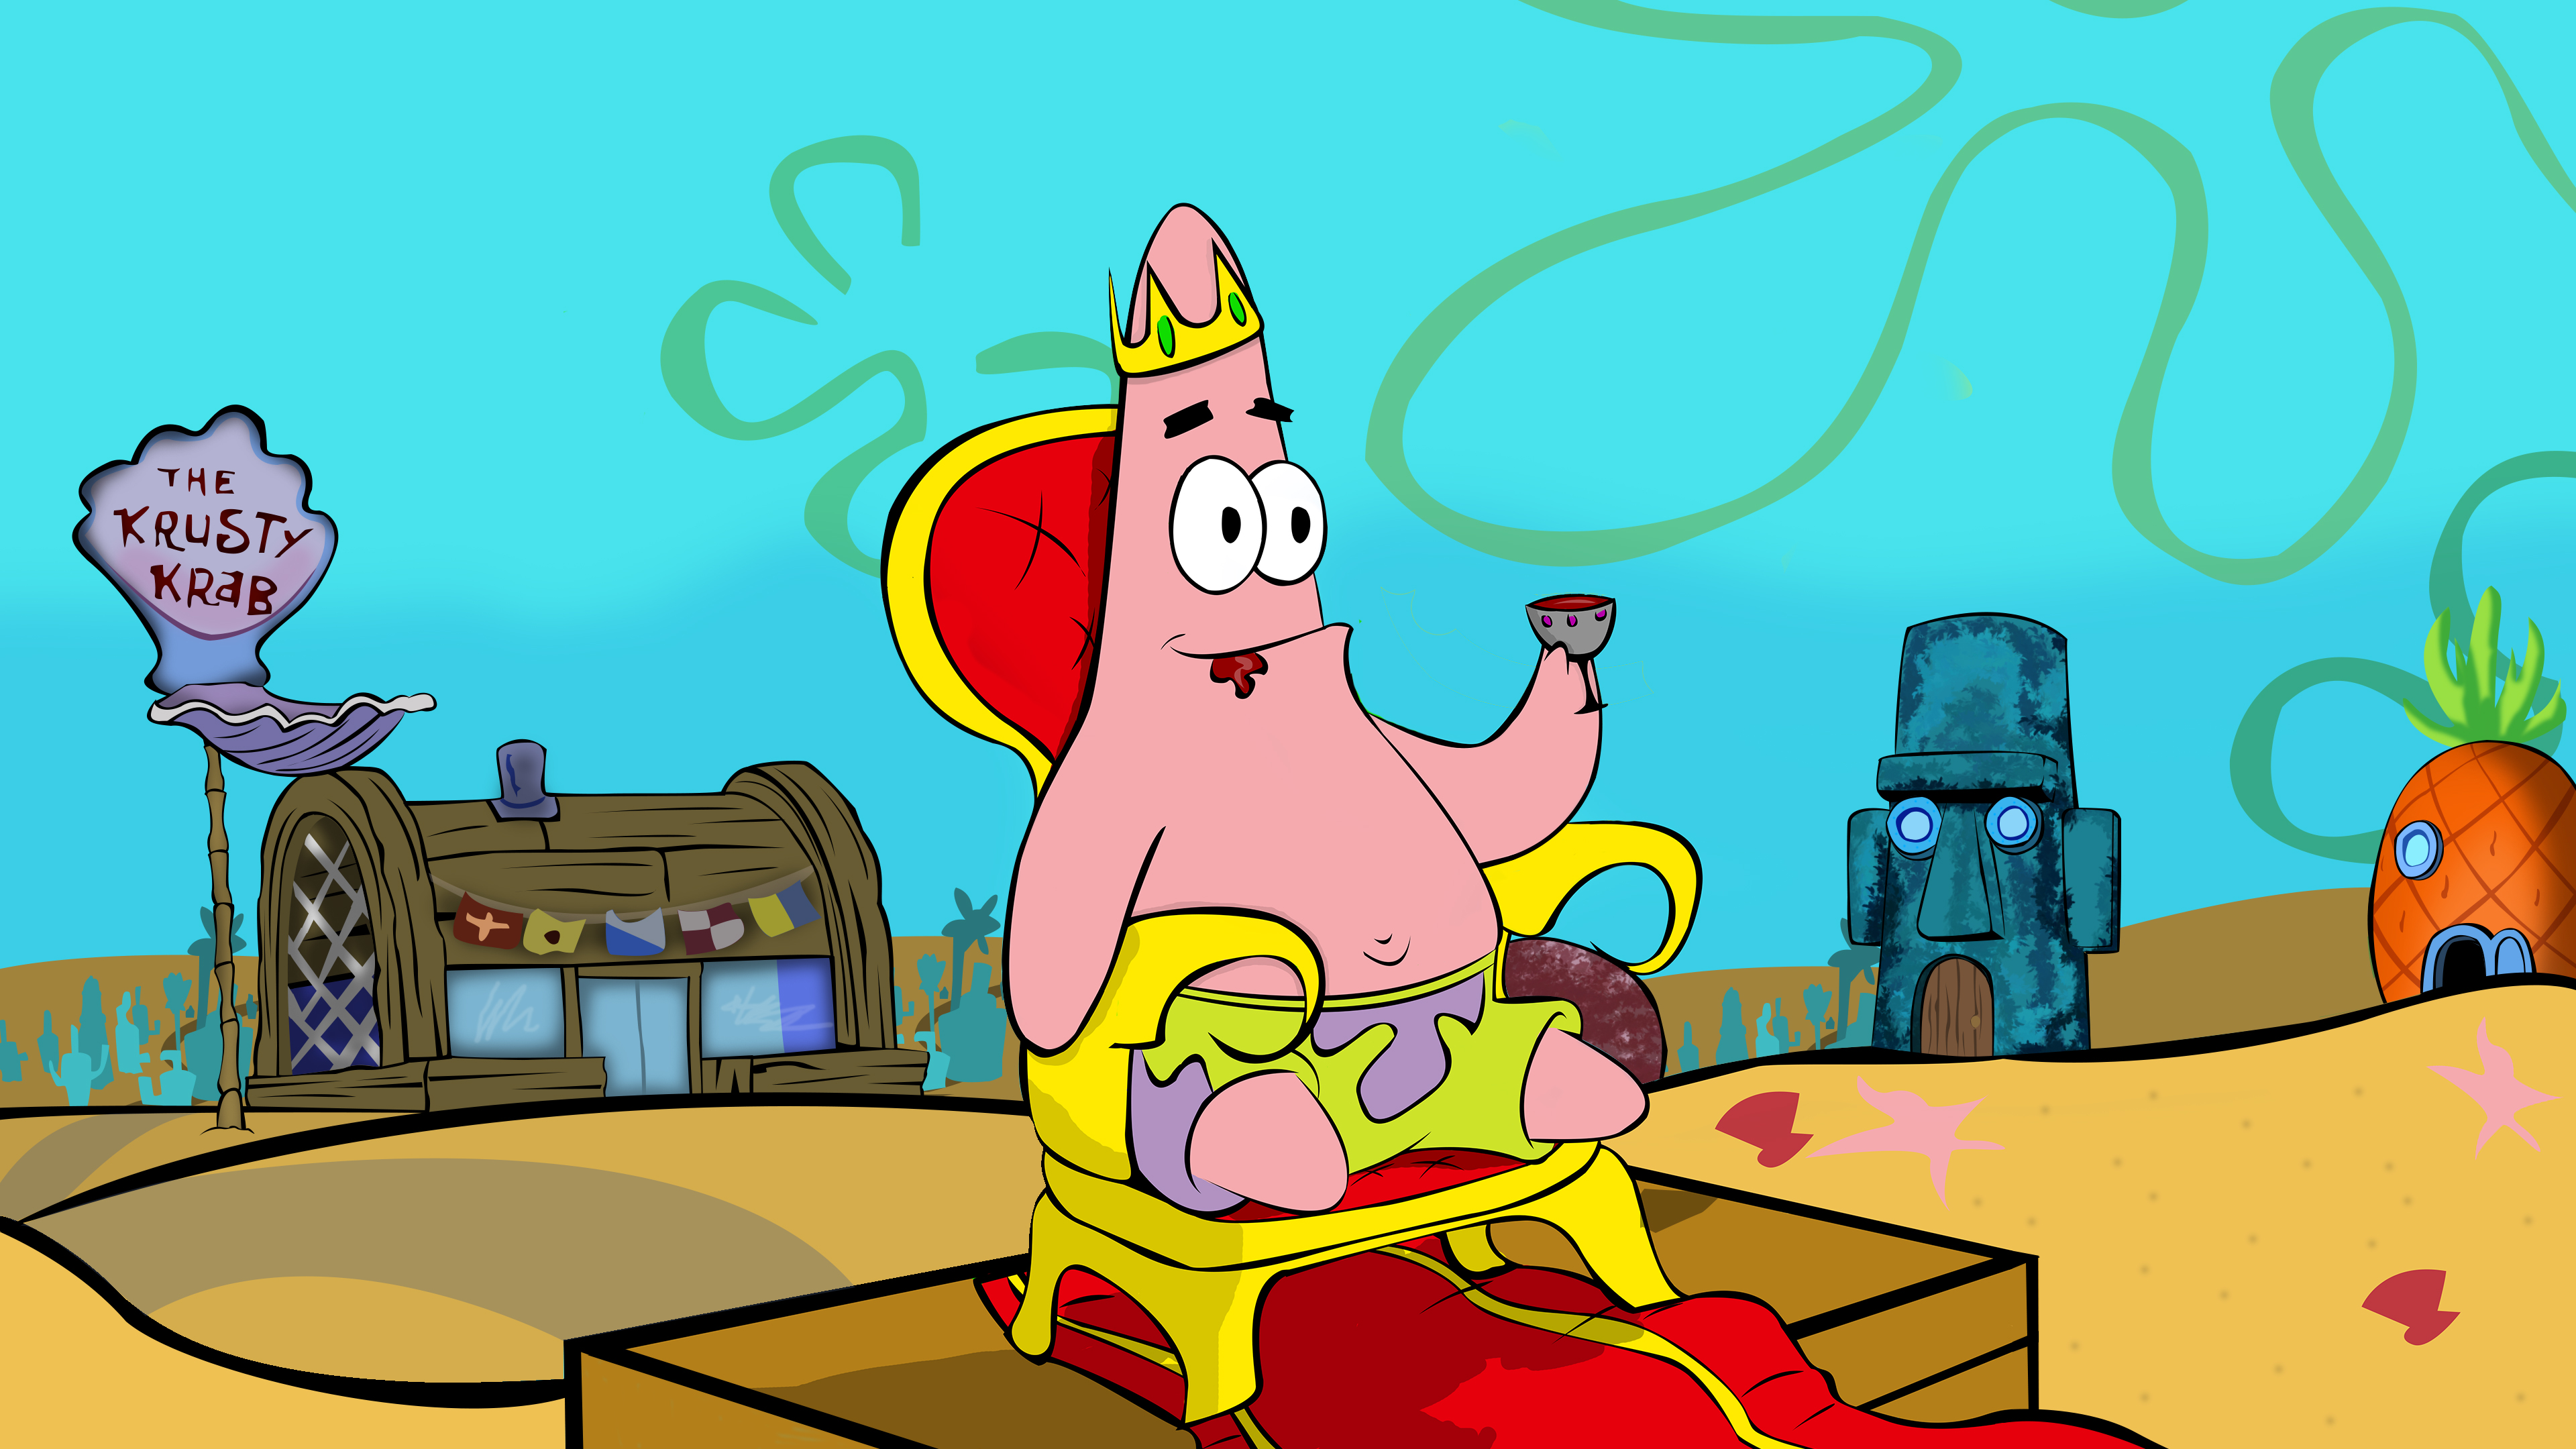 Patrick Spongebob Squarepants Spongebob Drawing Illustration 3840x2160